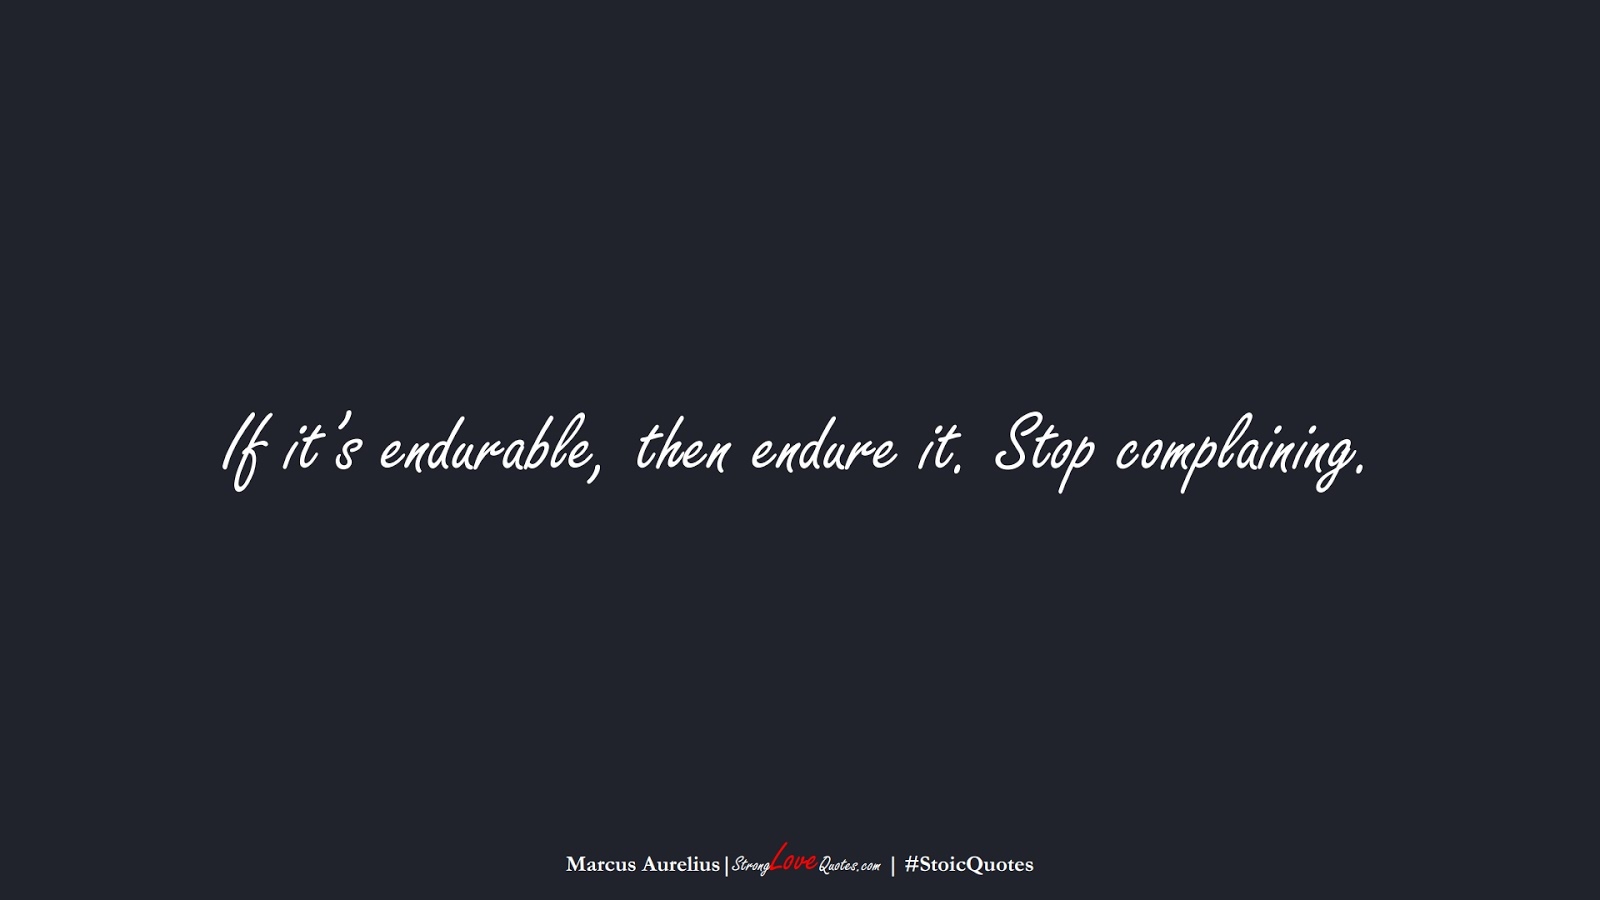 If it’s endurable, then endure it. Stop complaining. (Marcus Aurelius);  #StoicQuotes